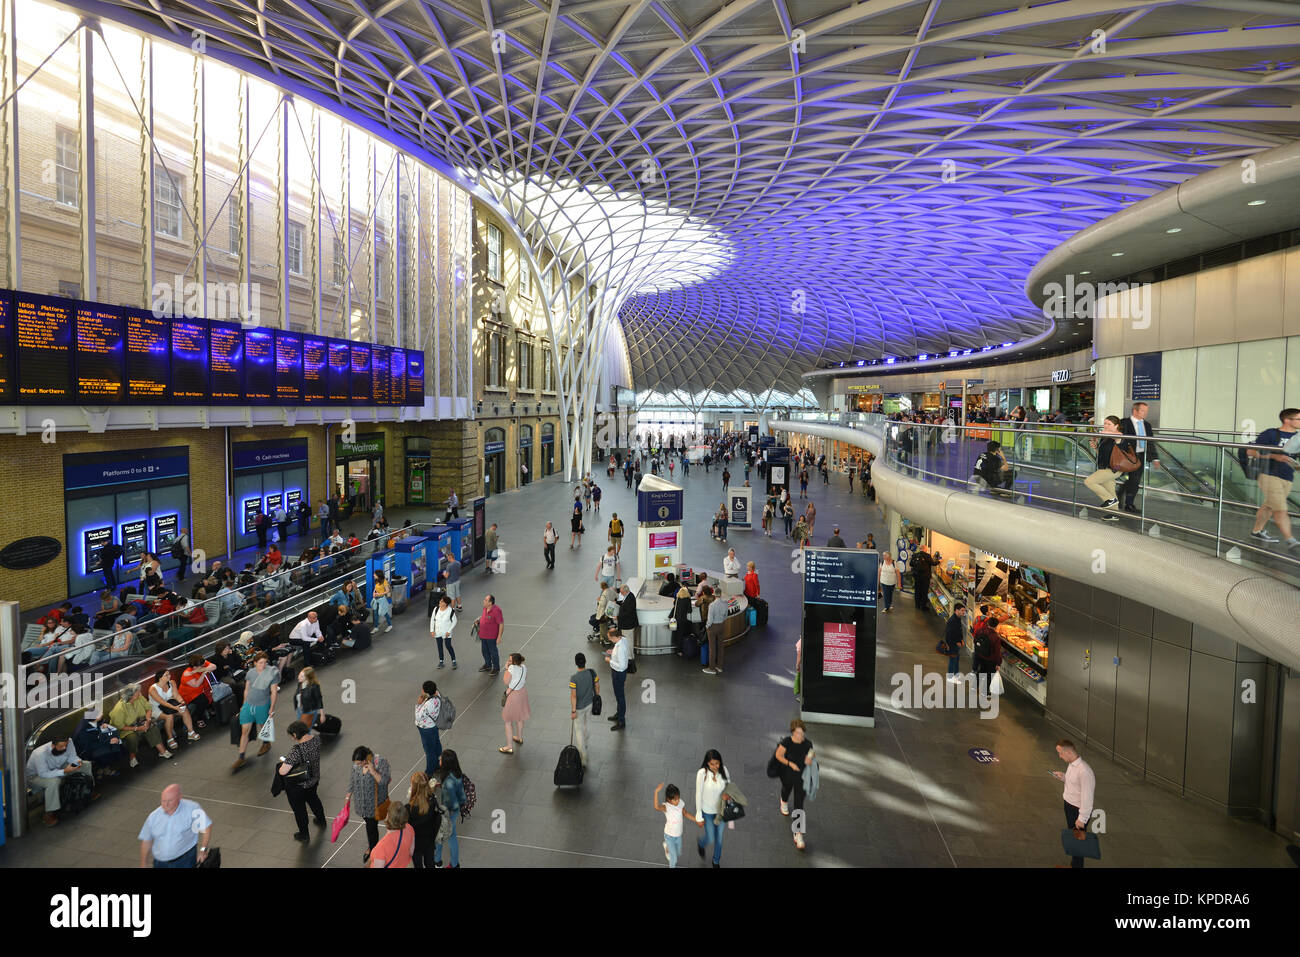 Westlichen Bahnhofshalle in King's Cross von John McAslan + Partner. Innenraum der Kings Cross Station, London Stockfoto